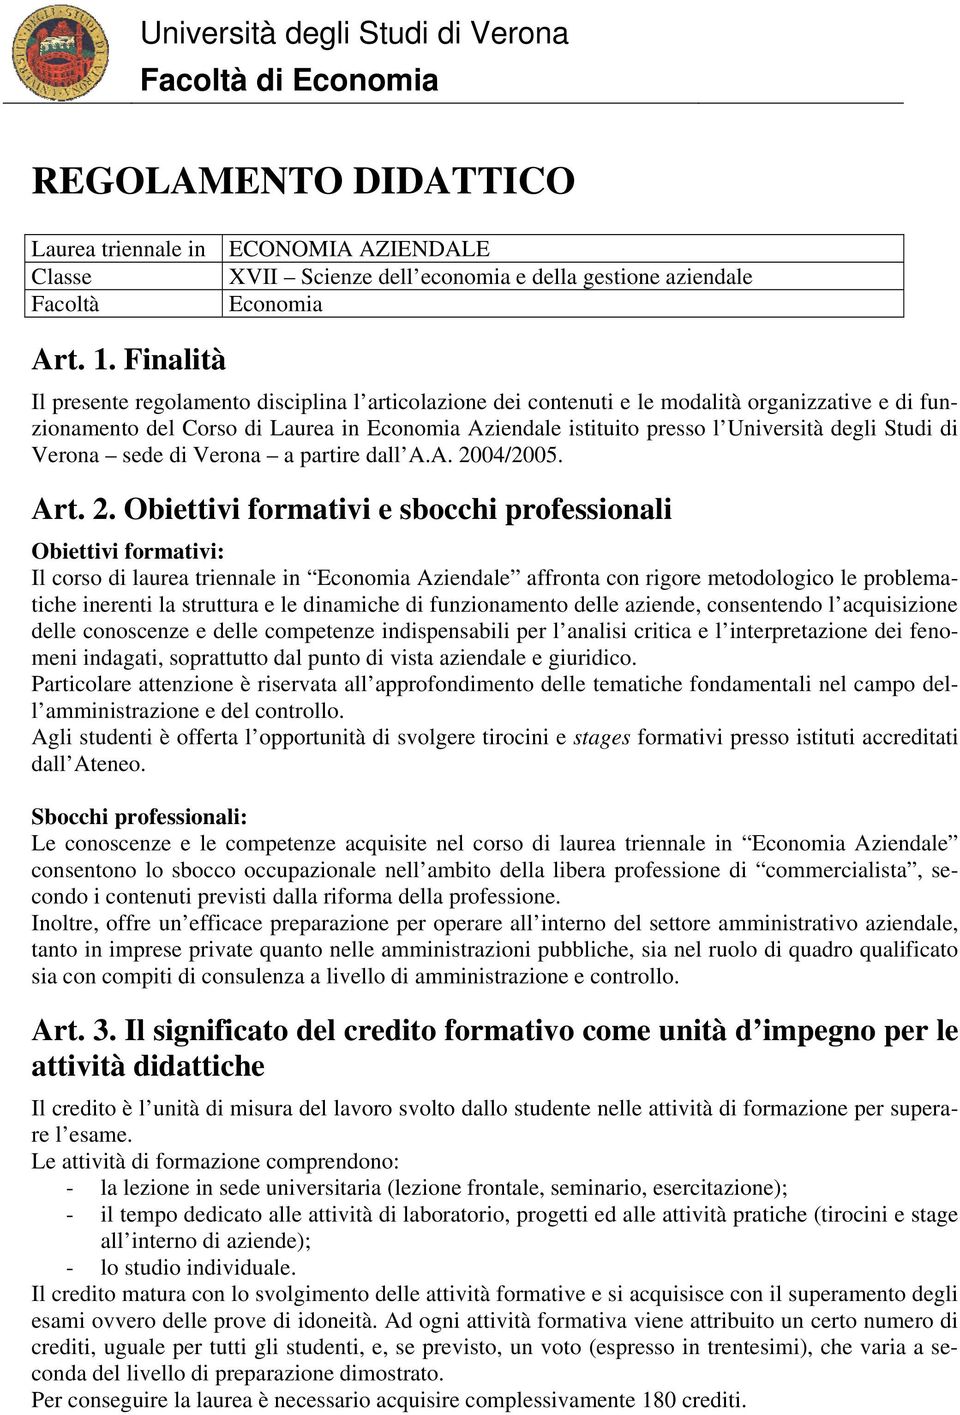 Studi di Verona sede di Verona a partire dall A.A. 20